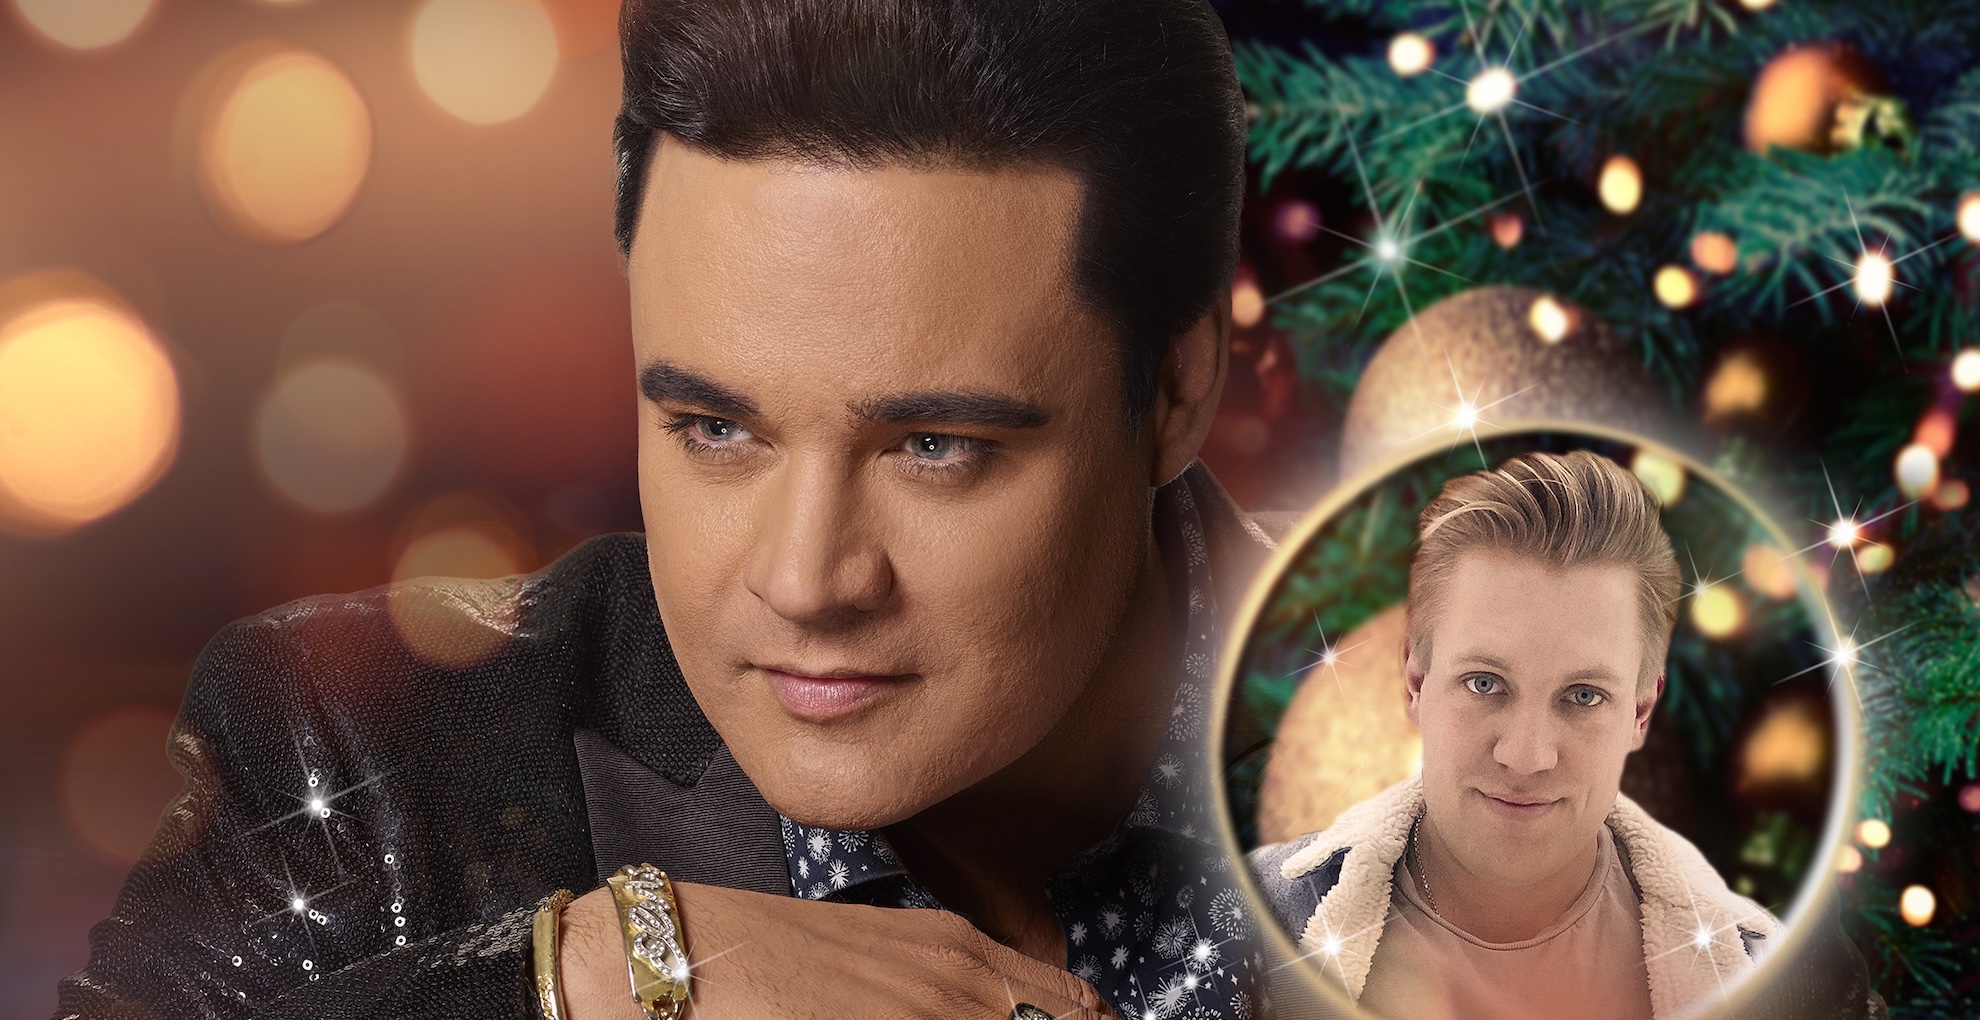 Turnépremiär "A Christmas With Elvis"